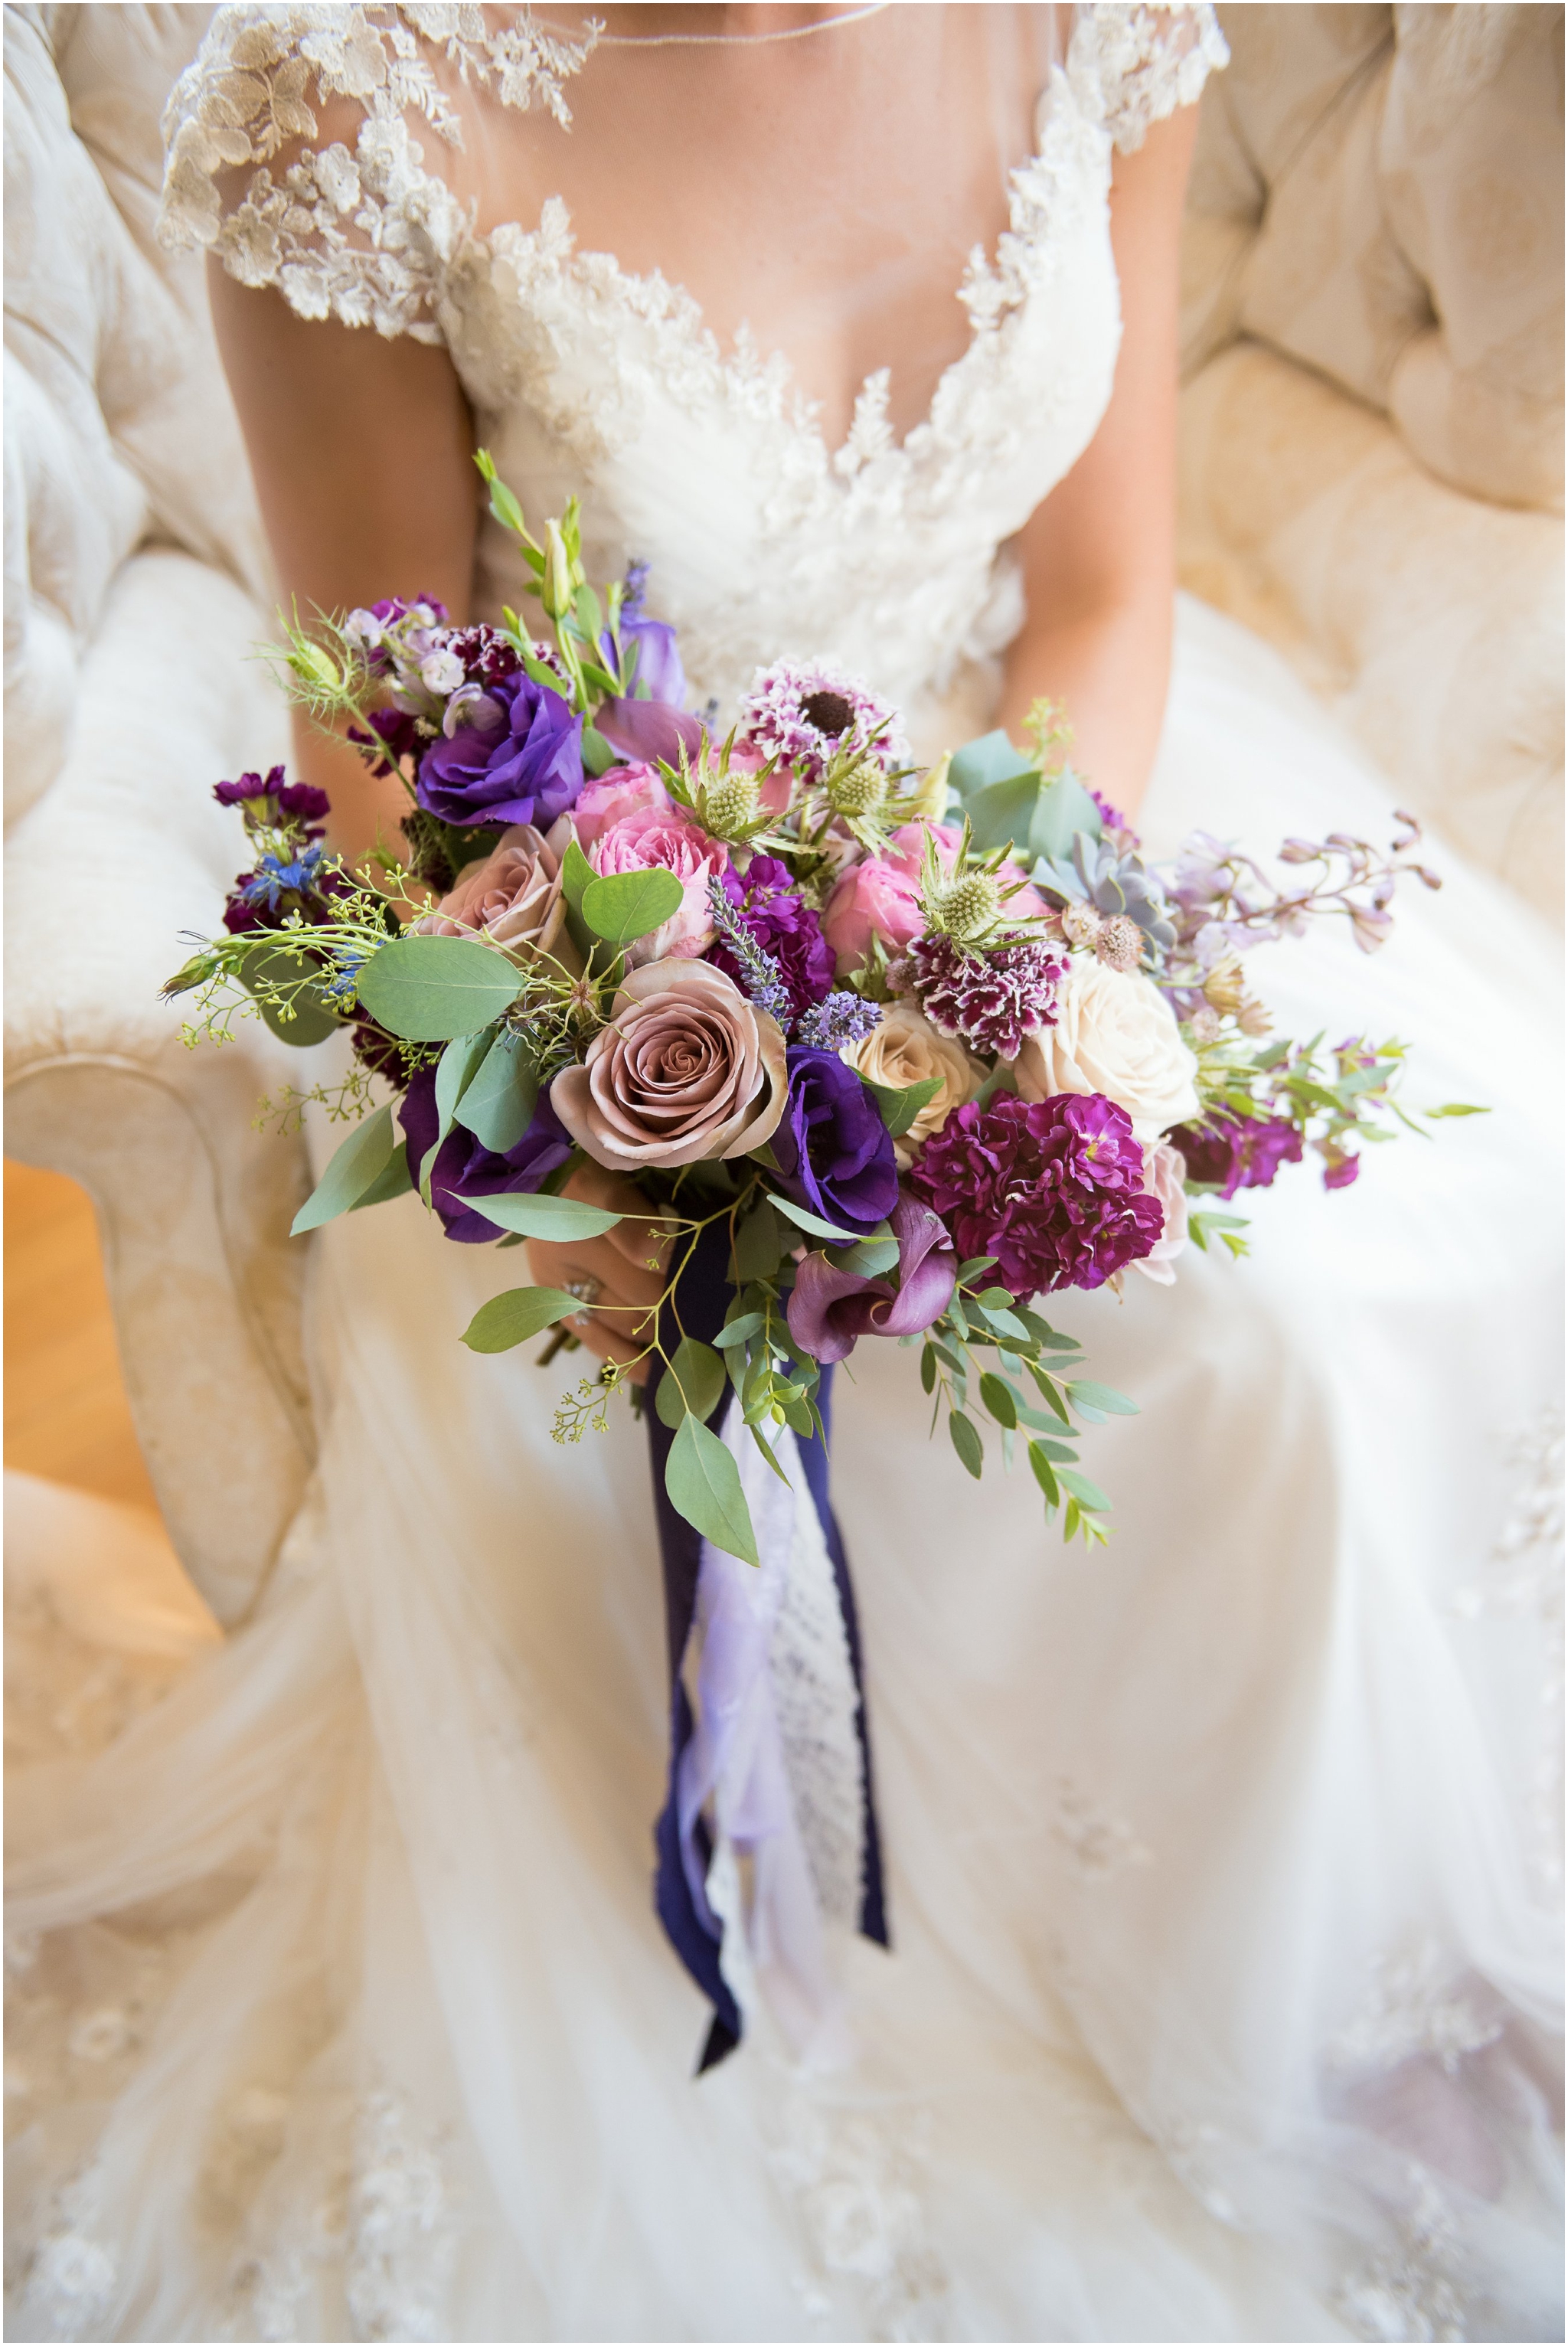 Mark and Alyssa | Laurel Hall Wedding | Indianapolis, IN | Purple wedding details | Woven Blooms Florist